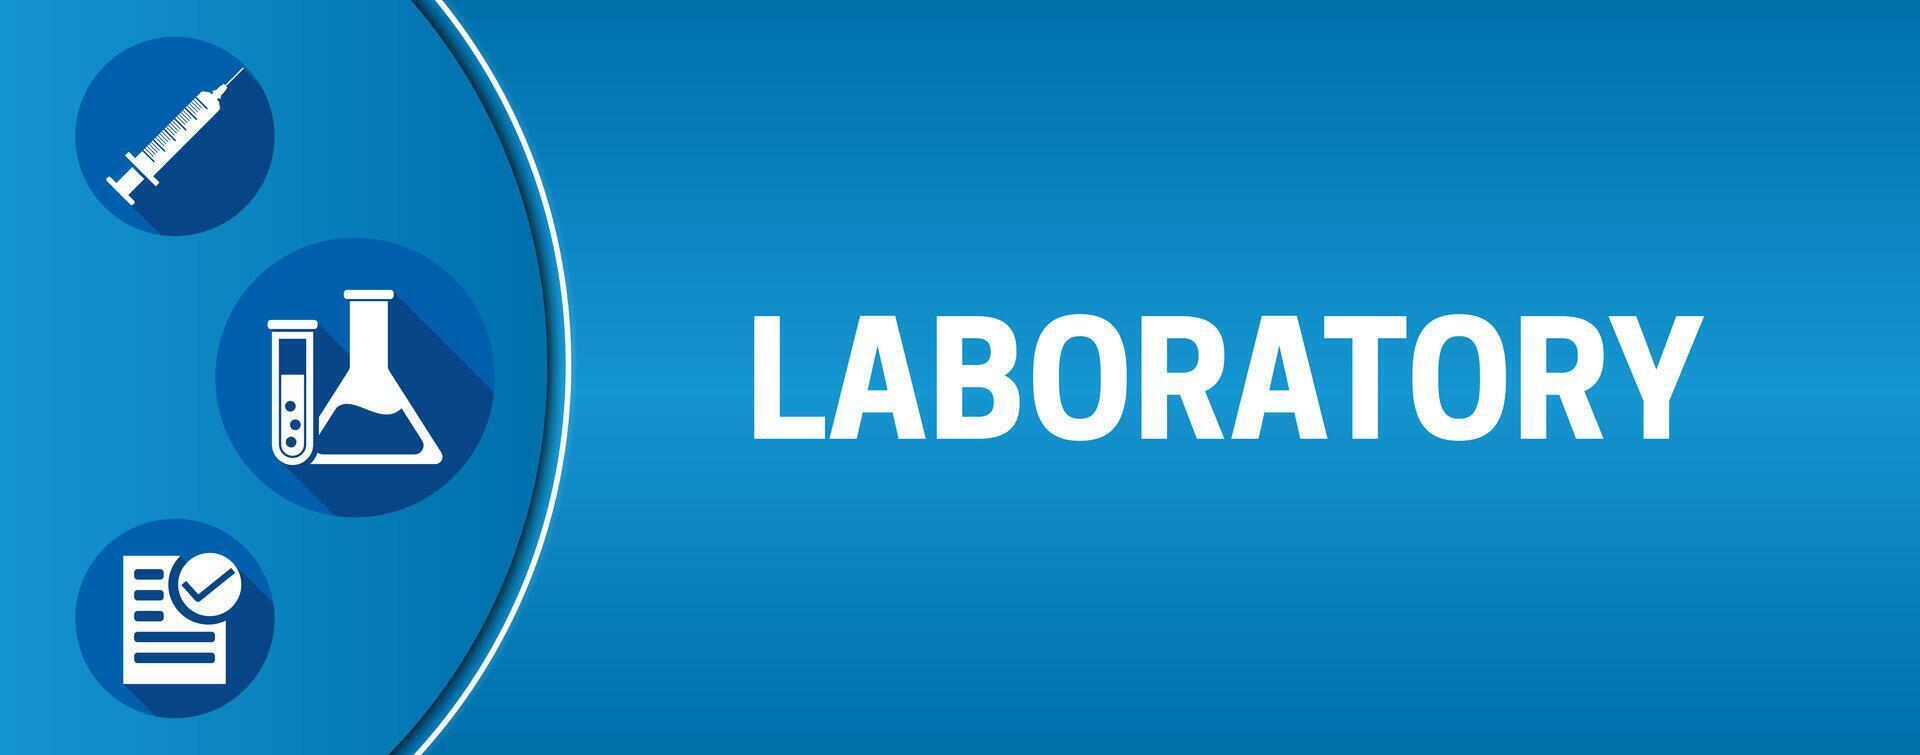 Blue Laboratory Background Illustration Banner vector